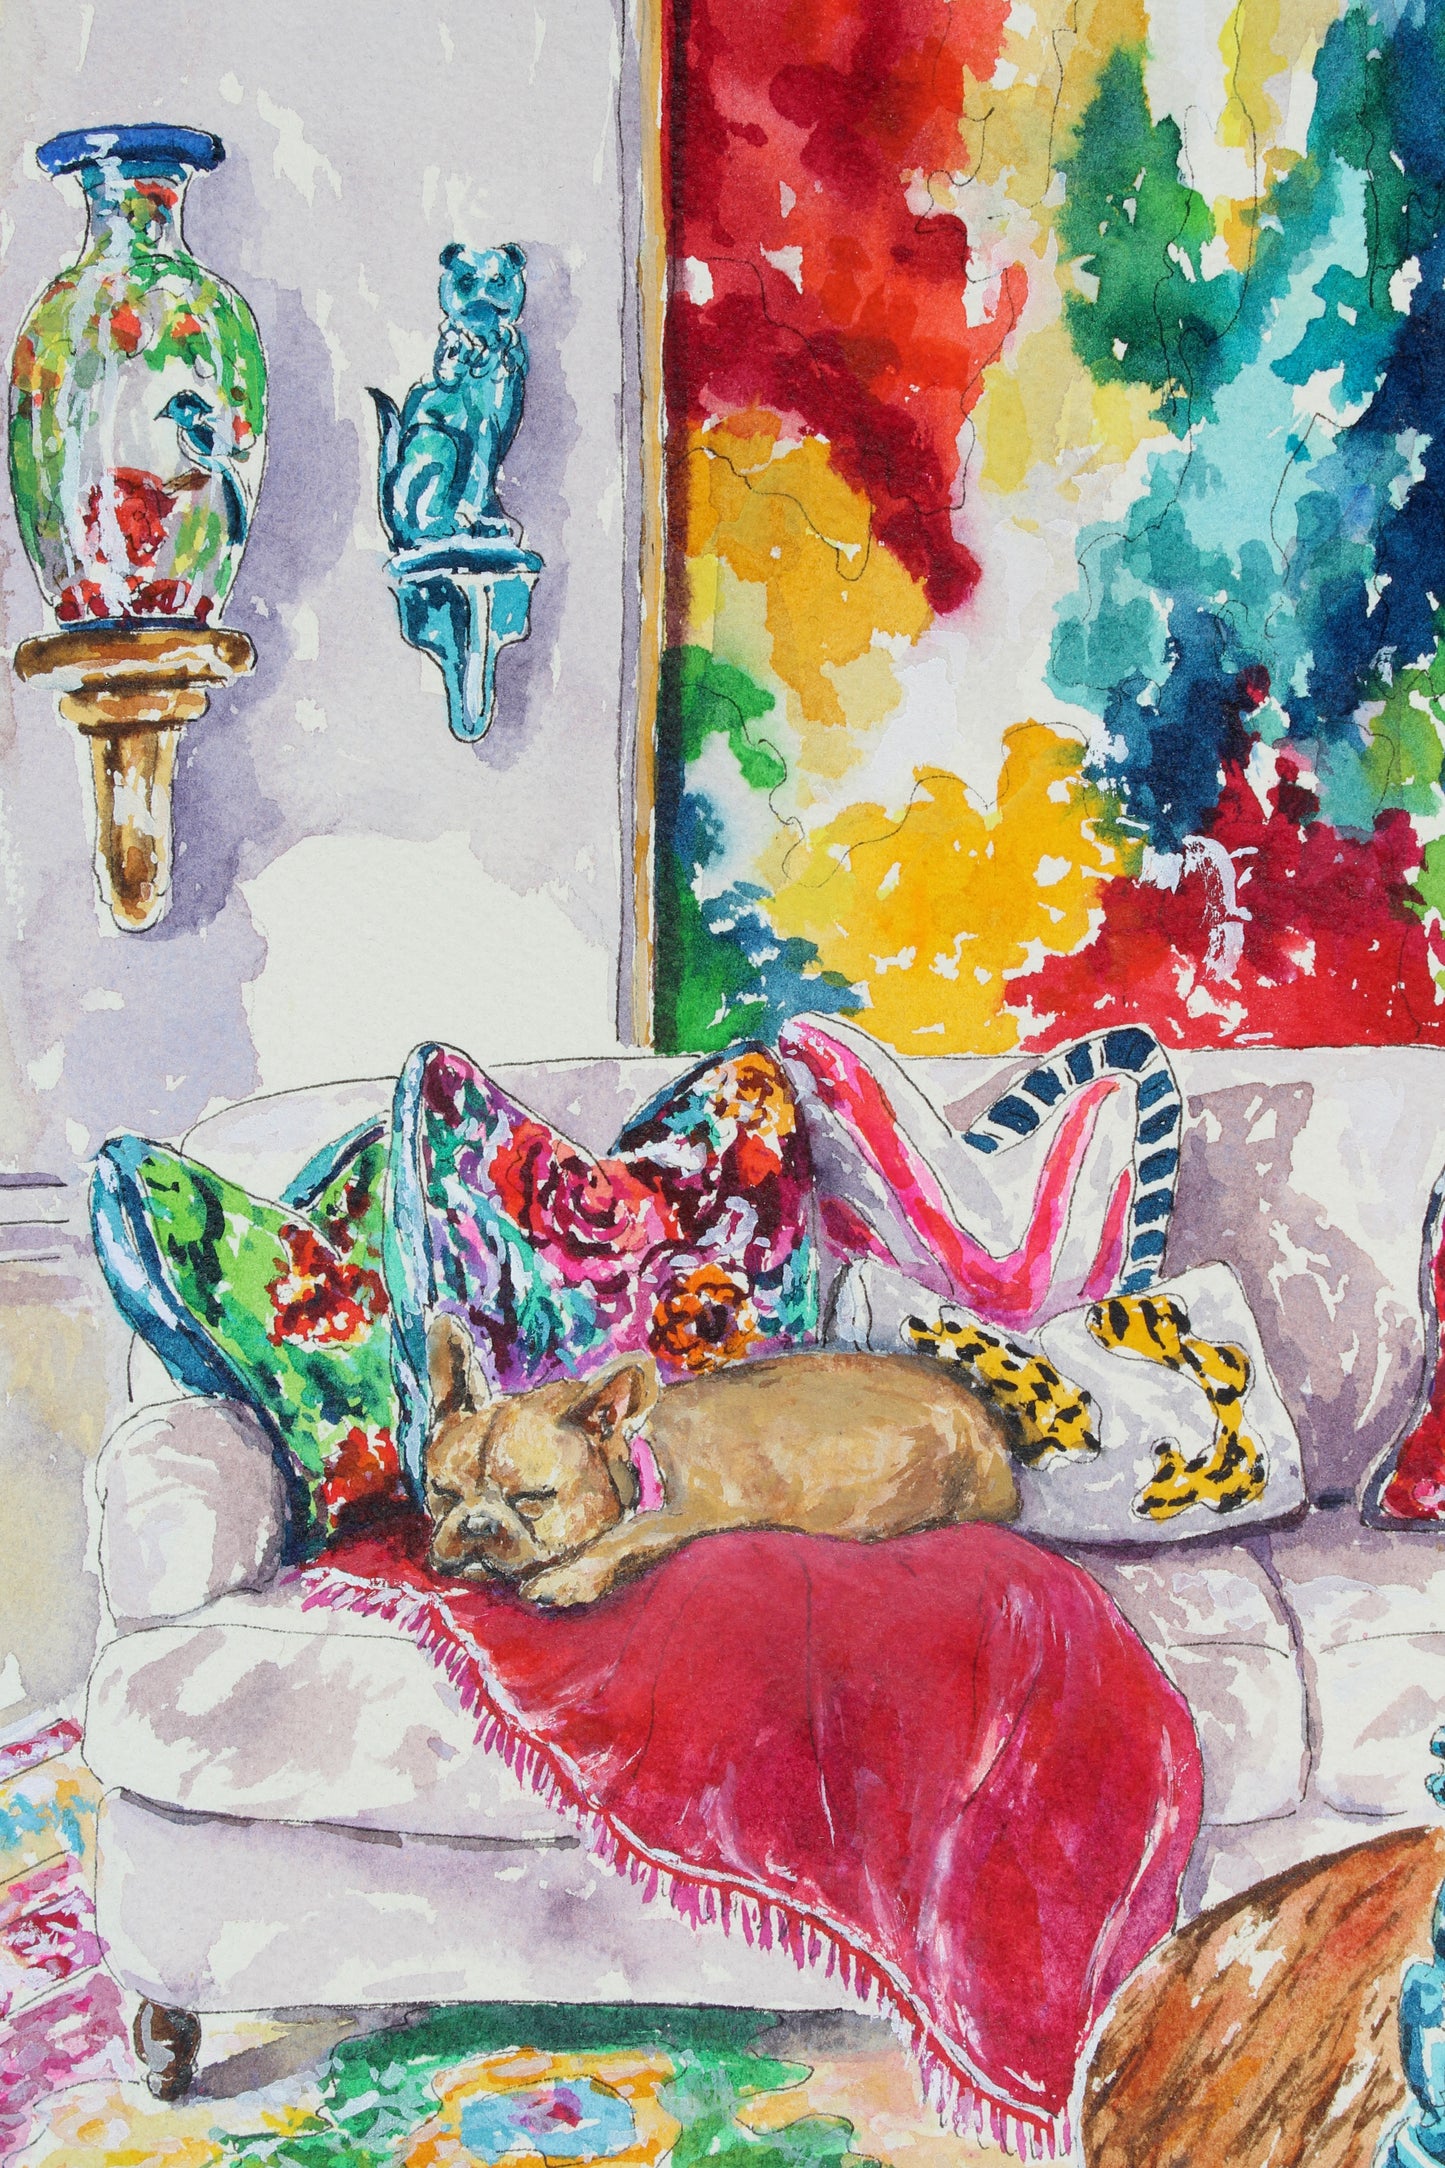 Dreaming Away, Original Watercolor And Ink Interior Painting Of A French Bulldog Asleep